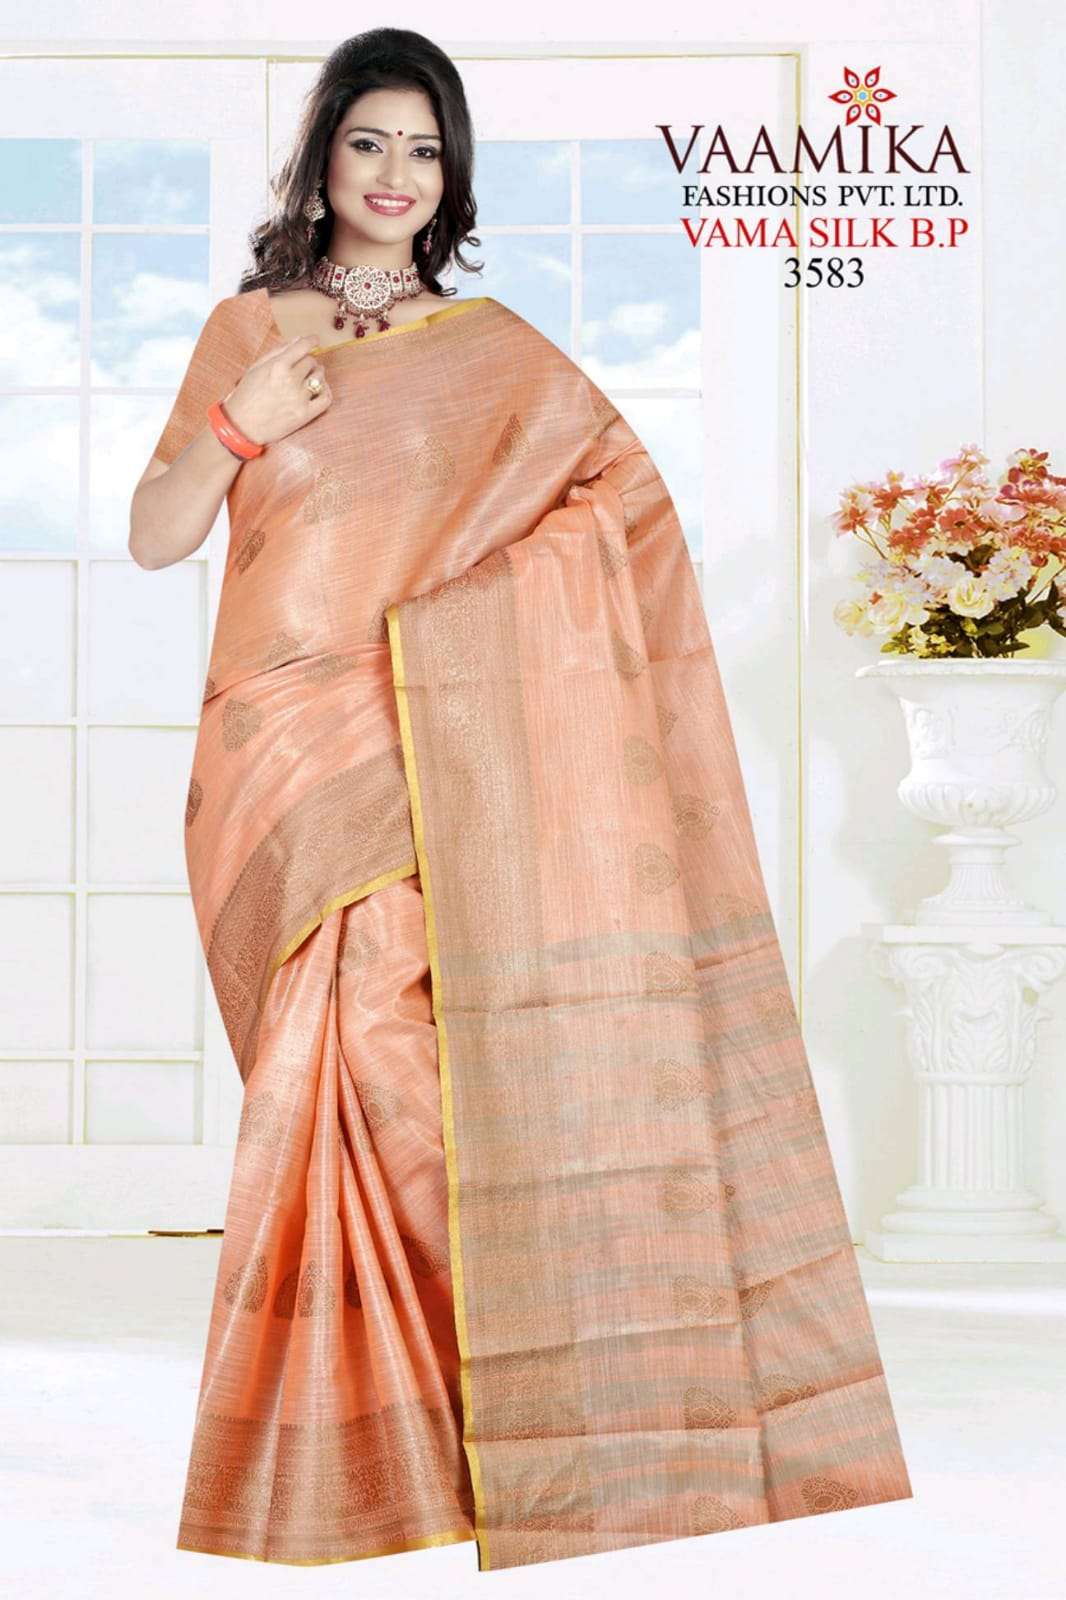 Vaamika Fashions Present Vama Silk Linen Traditional Wear Good Looking Saree